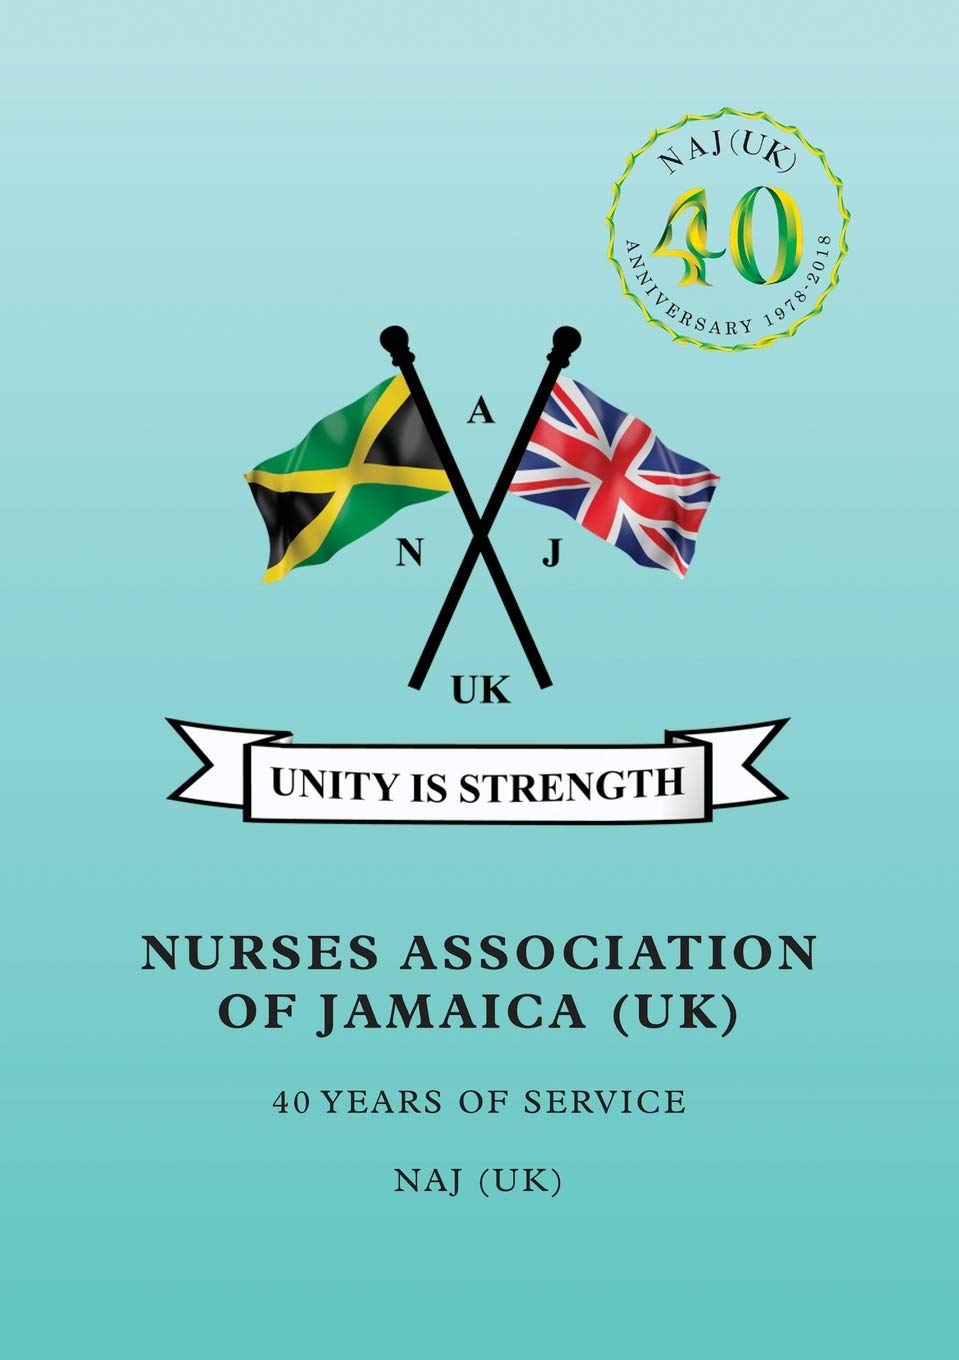 Nurses Association of Jamaica: 40 Years of Service